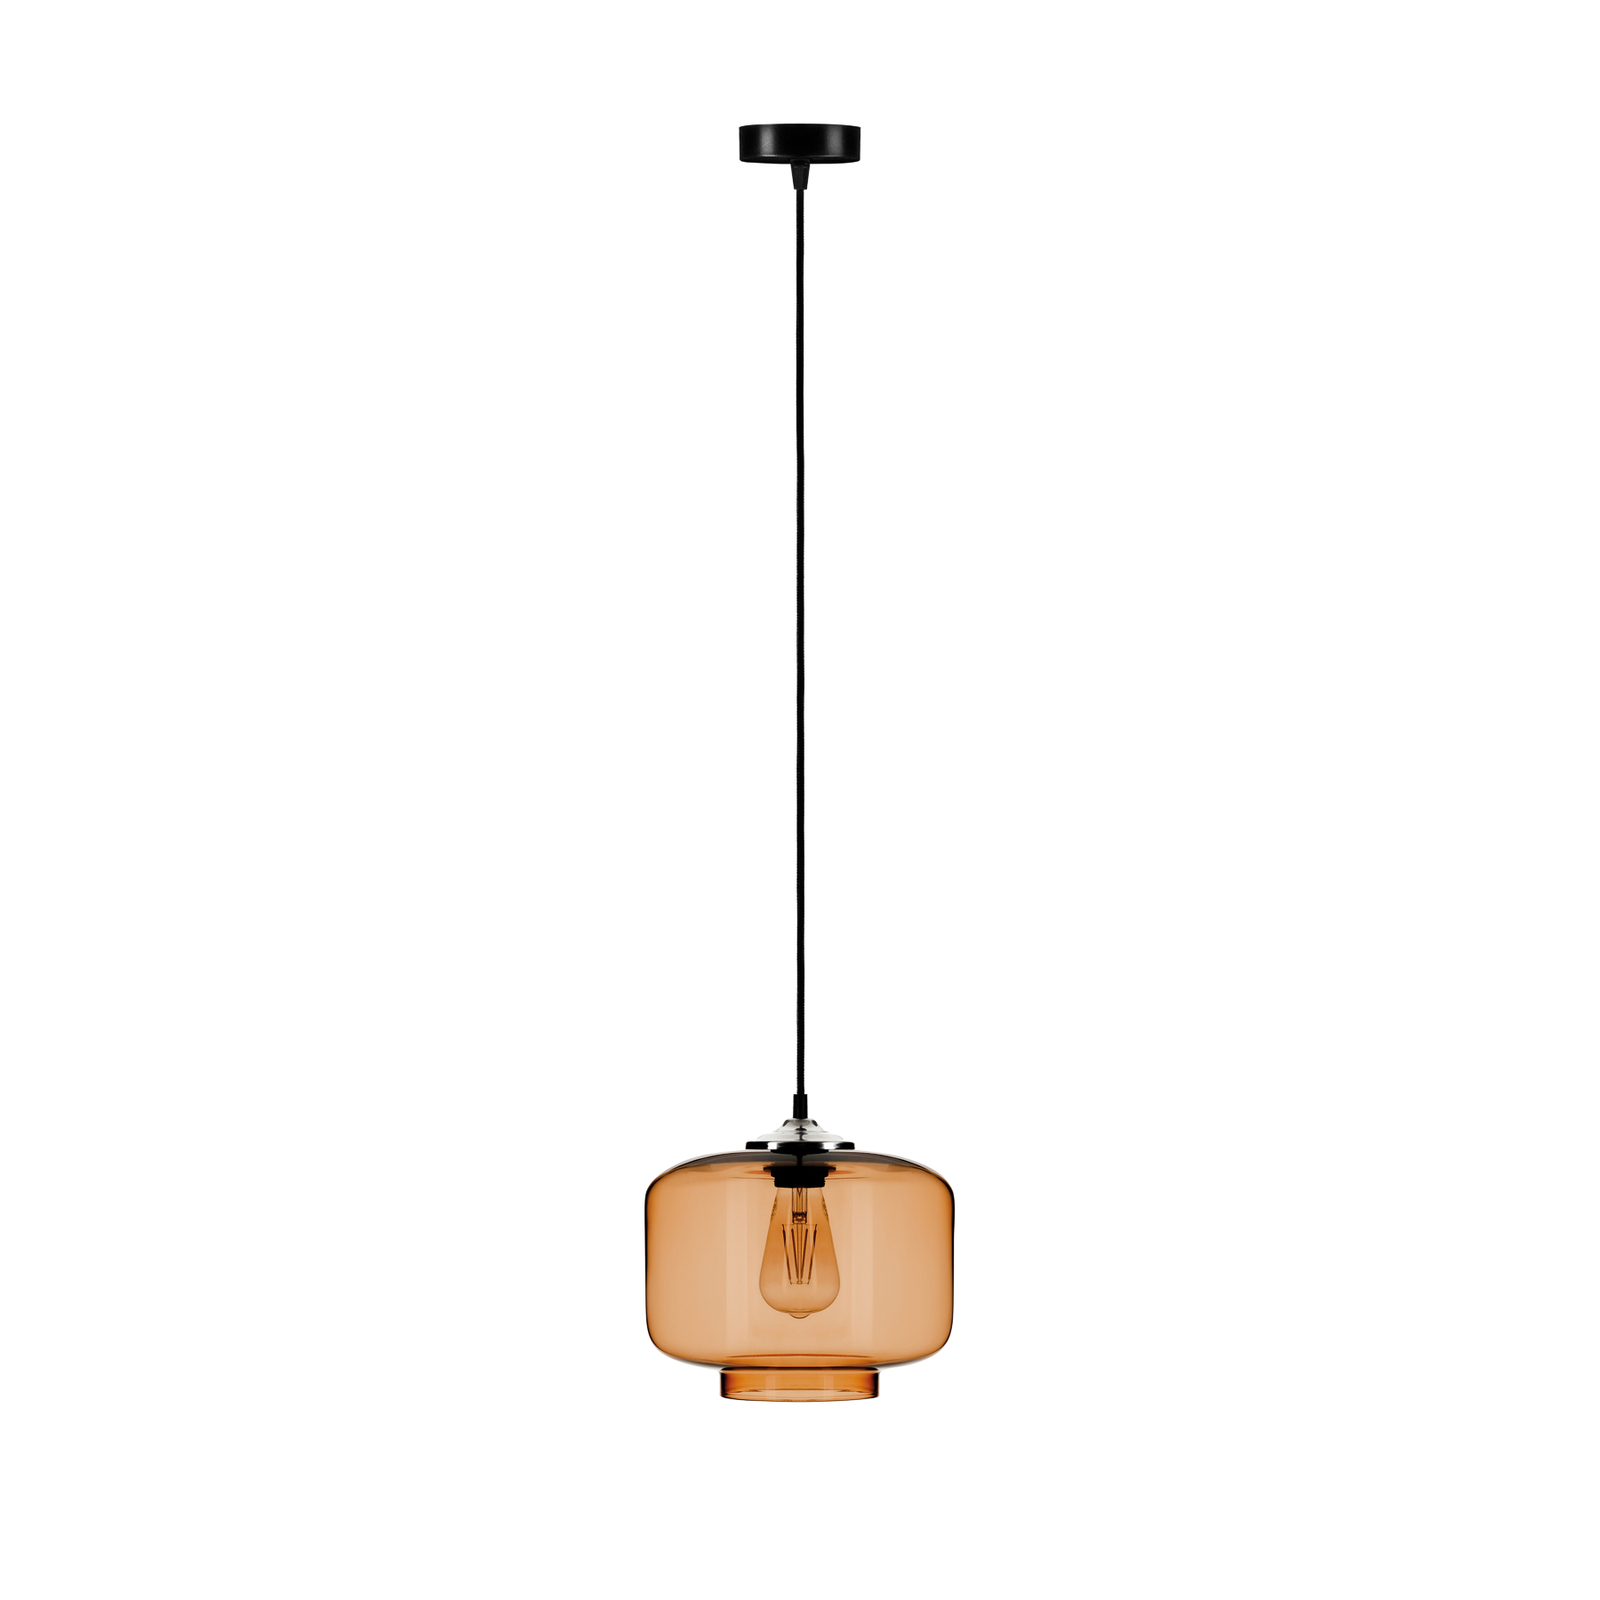 Controverse Oven Trekker Hanglamp Tube met glazen kap amber Ø 25cm | Lampen24.nl